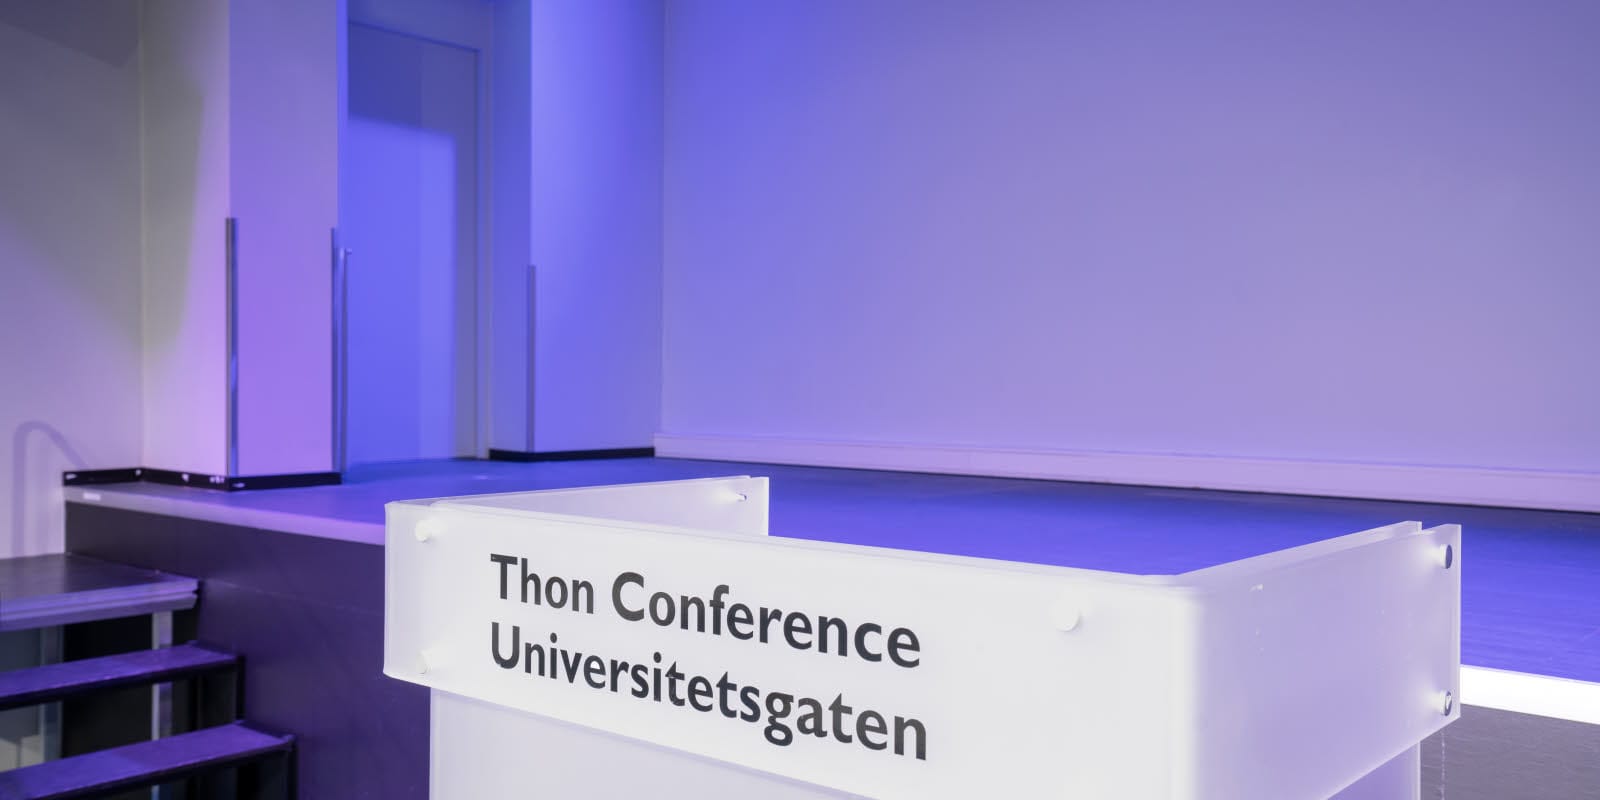 Detalj i konferensrummet Nansen på Thon Conference Universitetsgaten